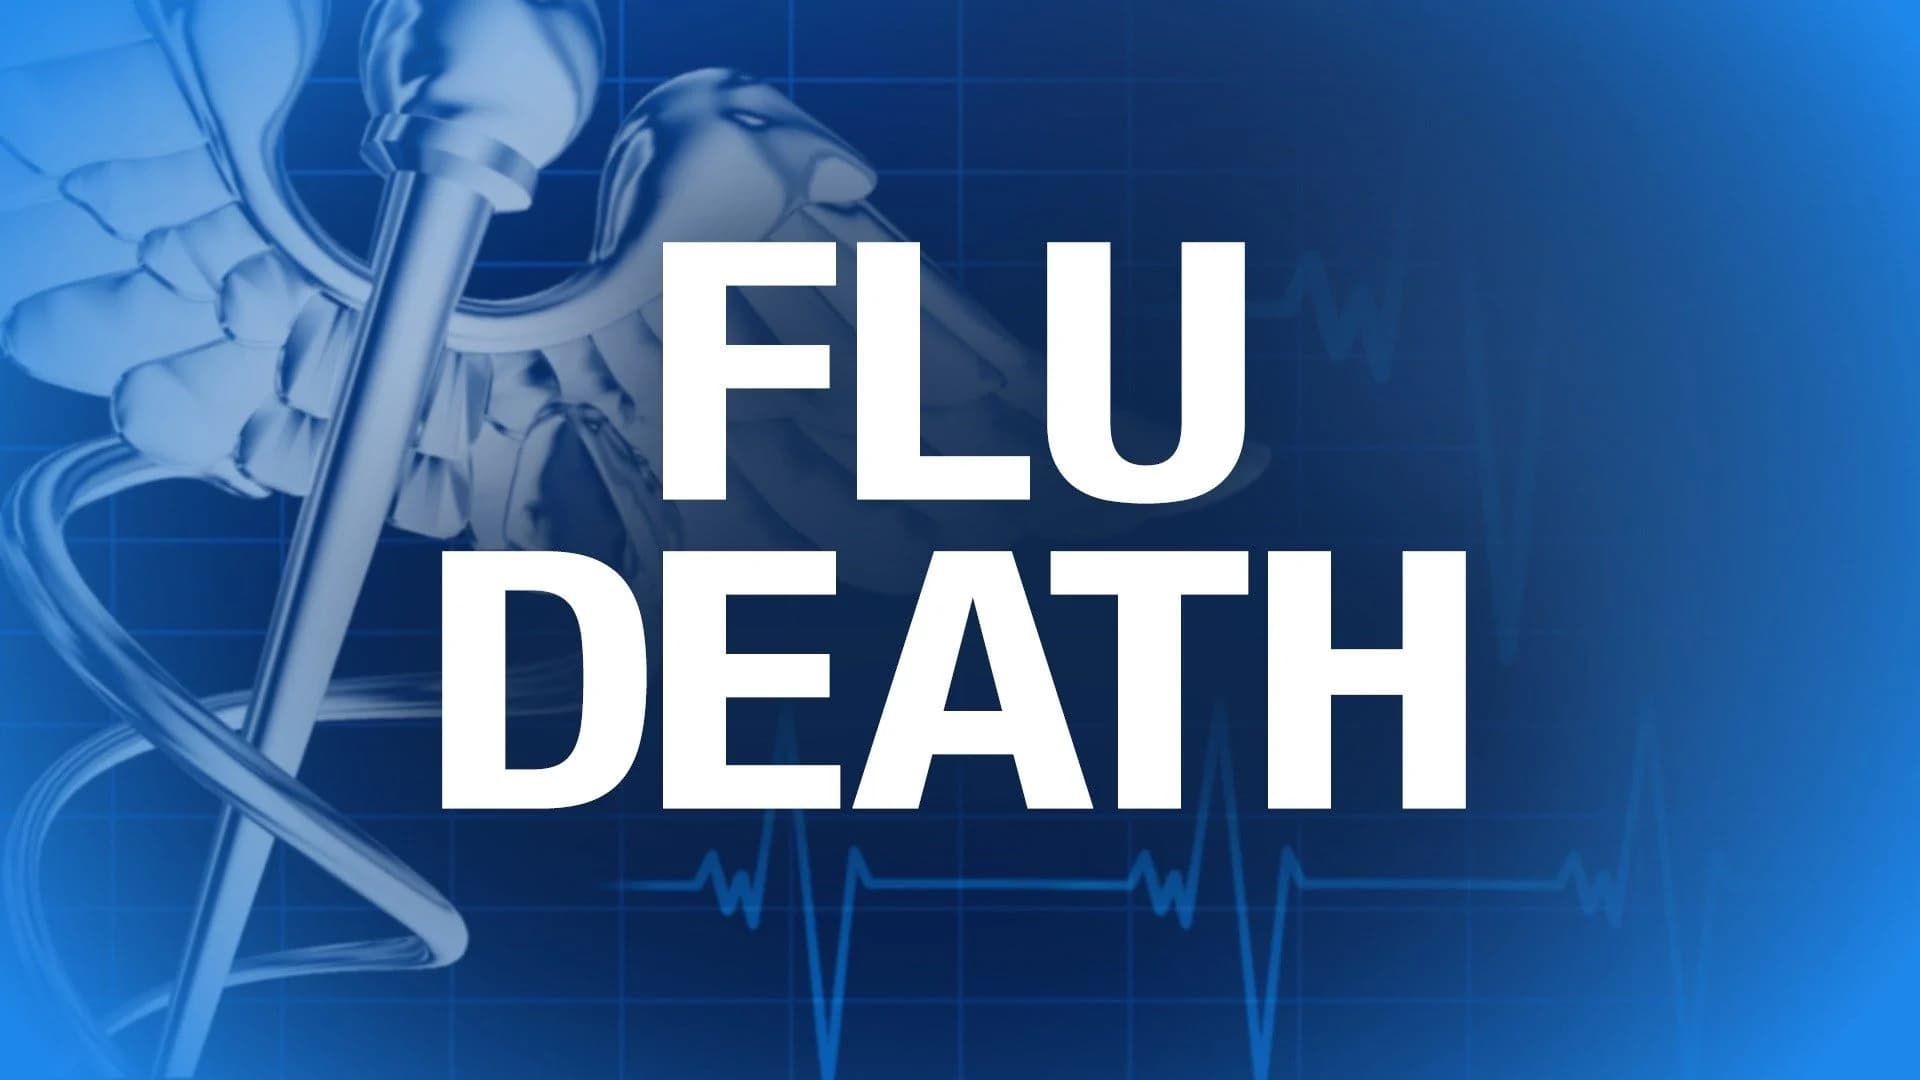 NJ Department of Health reports 3rd child flu death this season